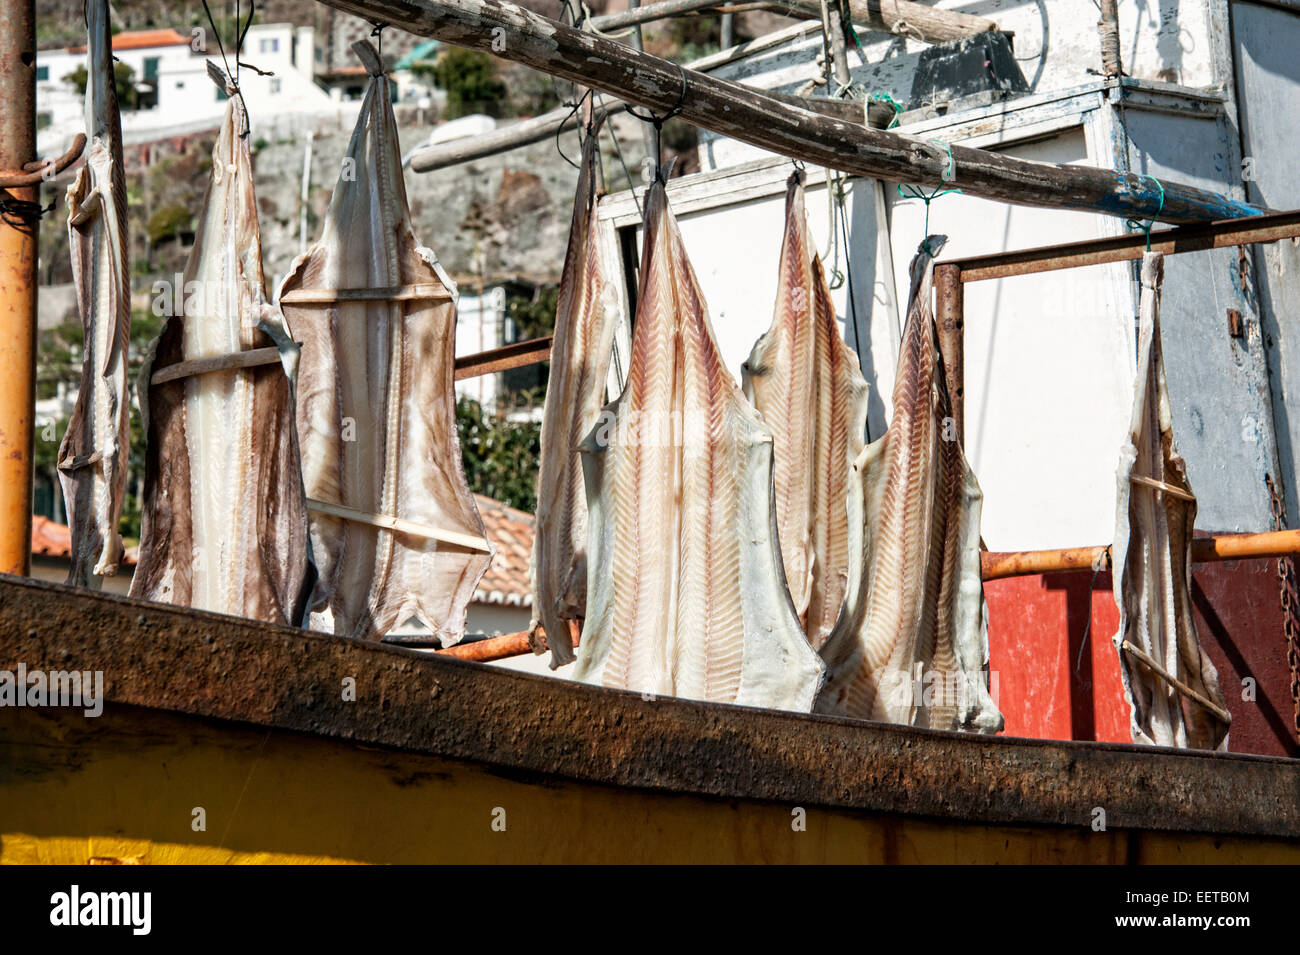 Reisen, Europa, Portugal, Madeira; Getrockneter Fisch, Stockfisch ...